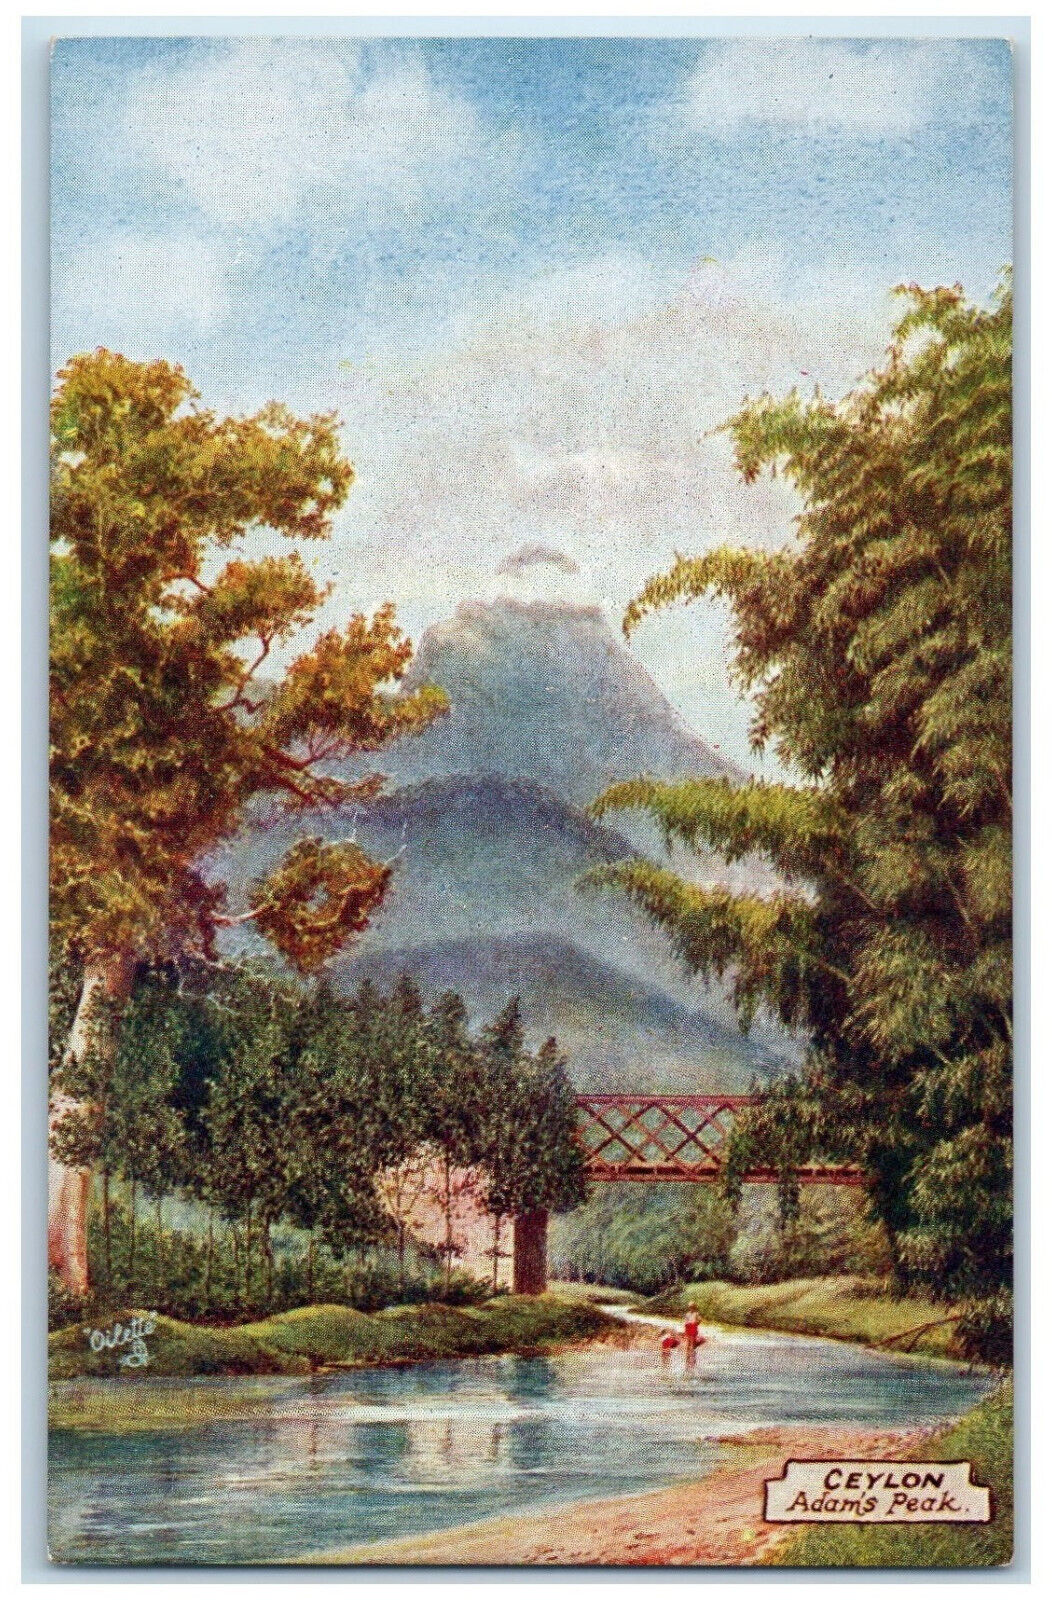 c1910 River & Mountain Scene, Ceylon Adam's Peak Oilette Art Tuck Postcard